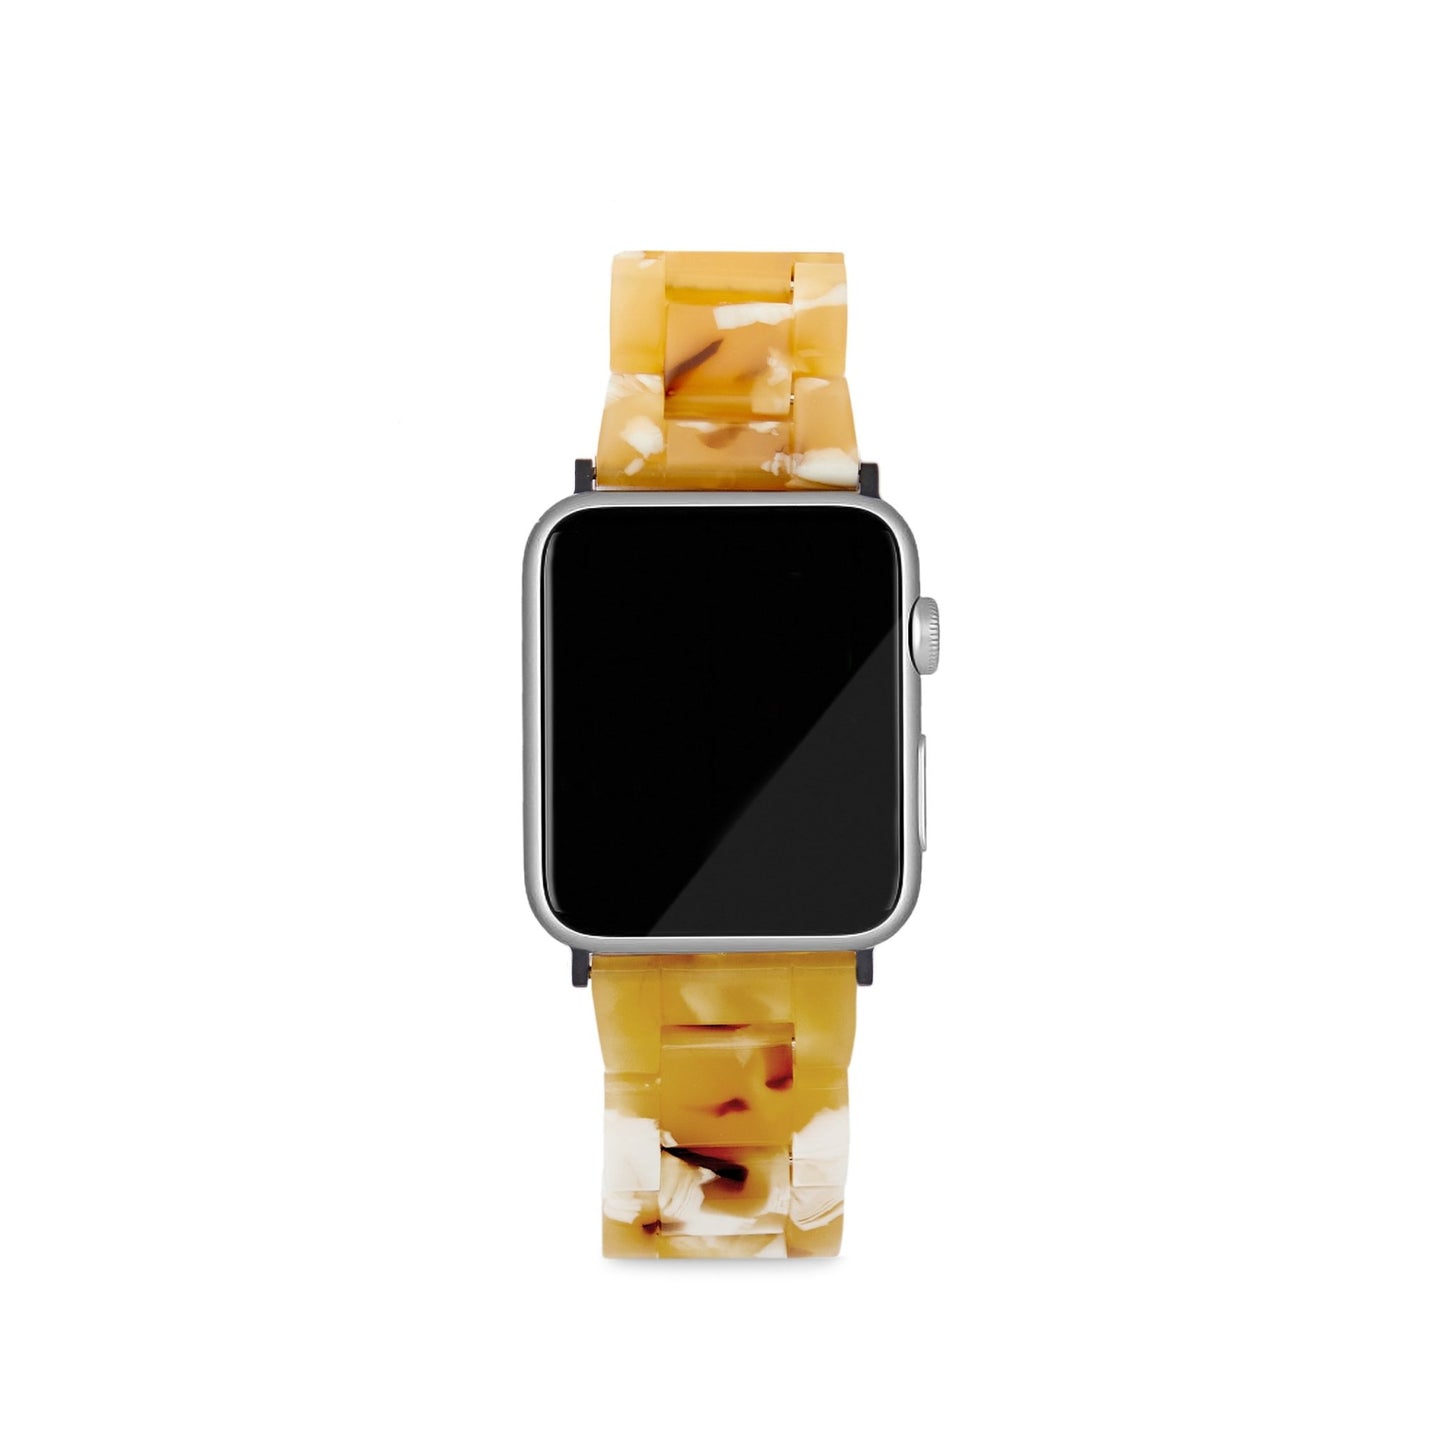 MACHETE Apple Watch Band in Mango Tortoise